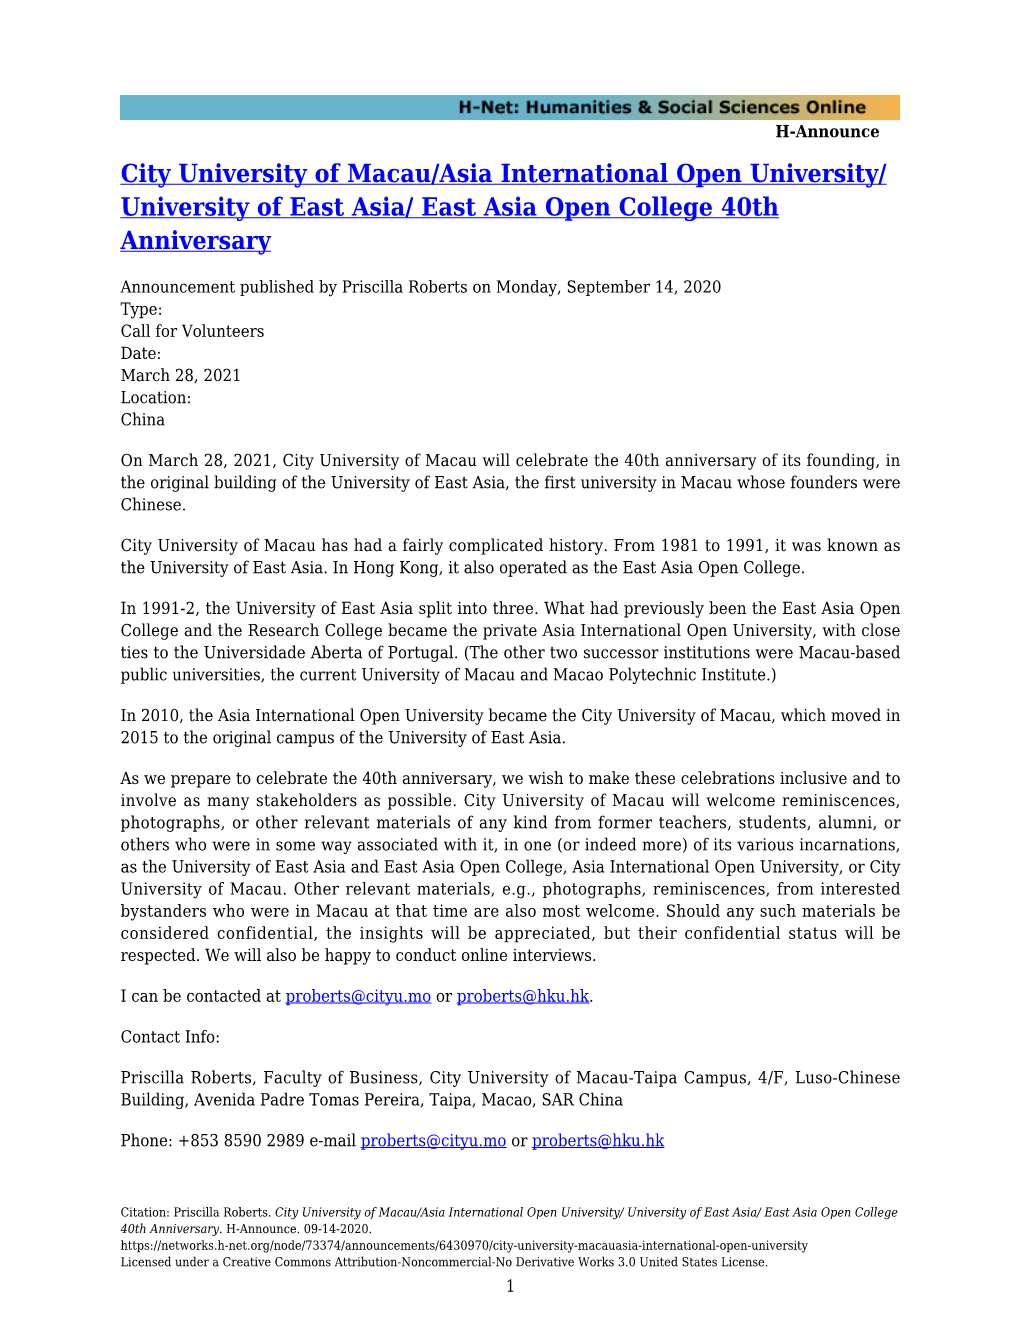 City University of Macau/Asia International Open University/ University of East Asia/ East Asia Open College 40Th Anniversary